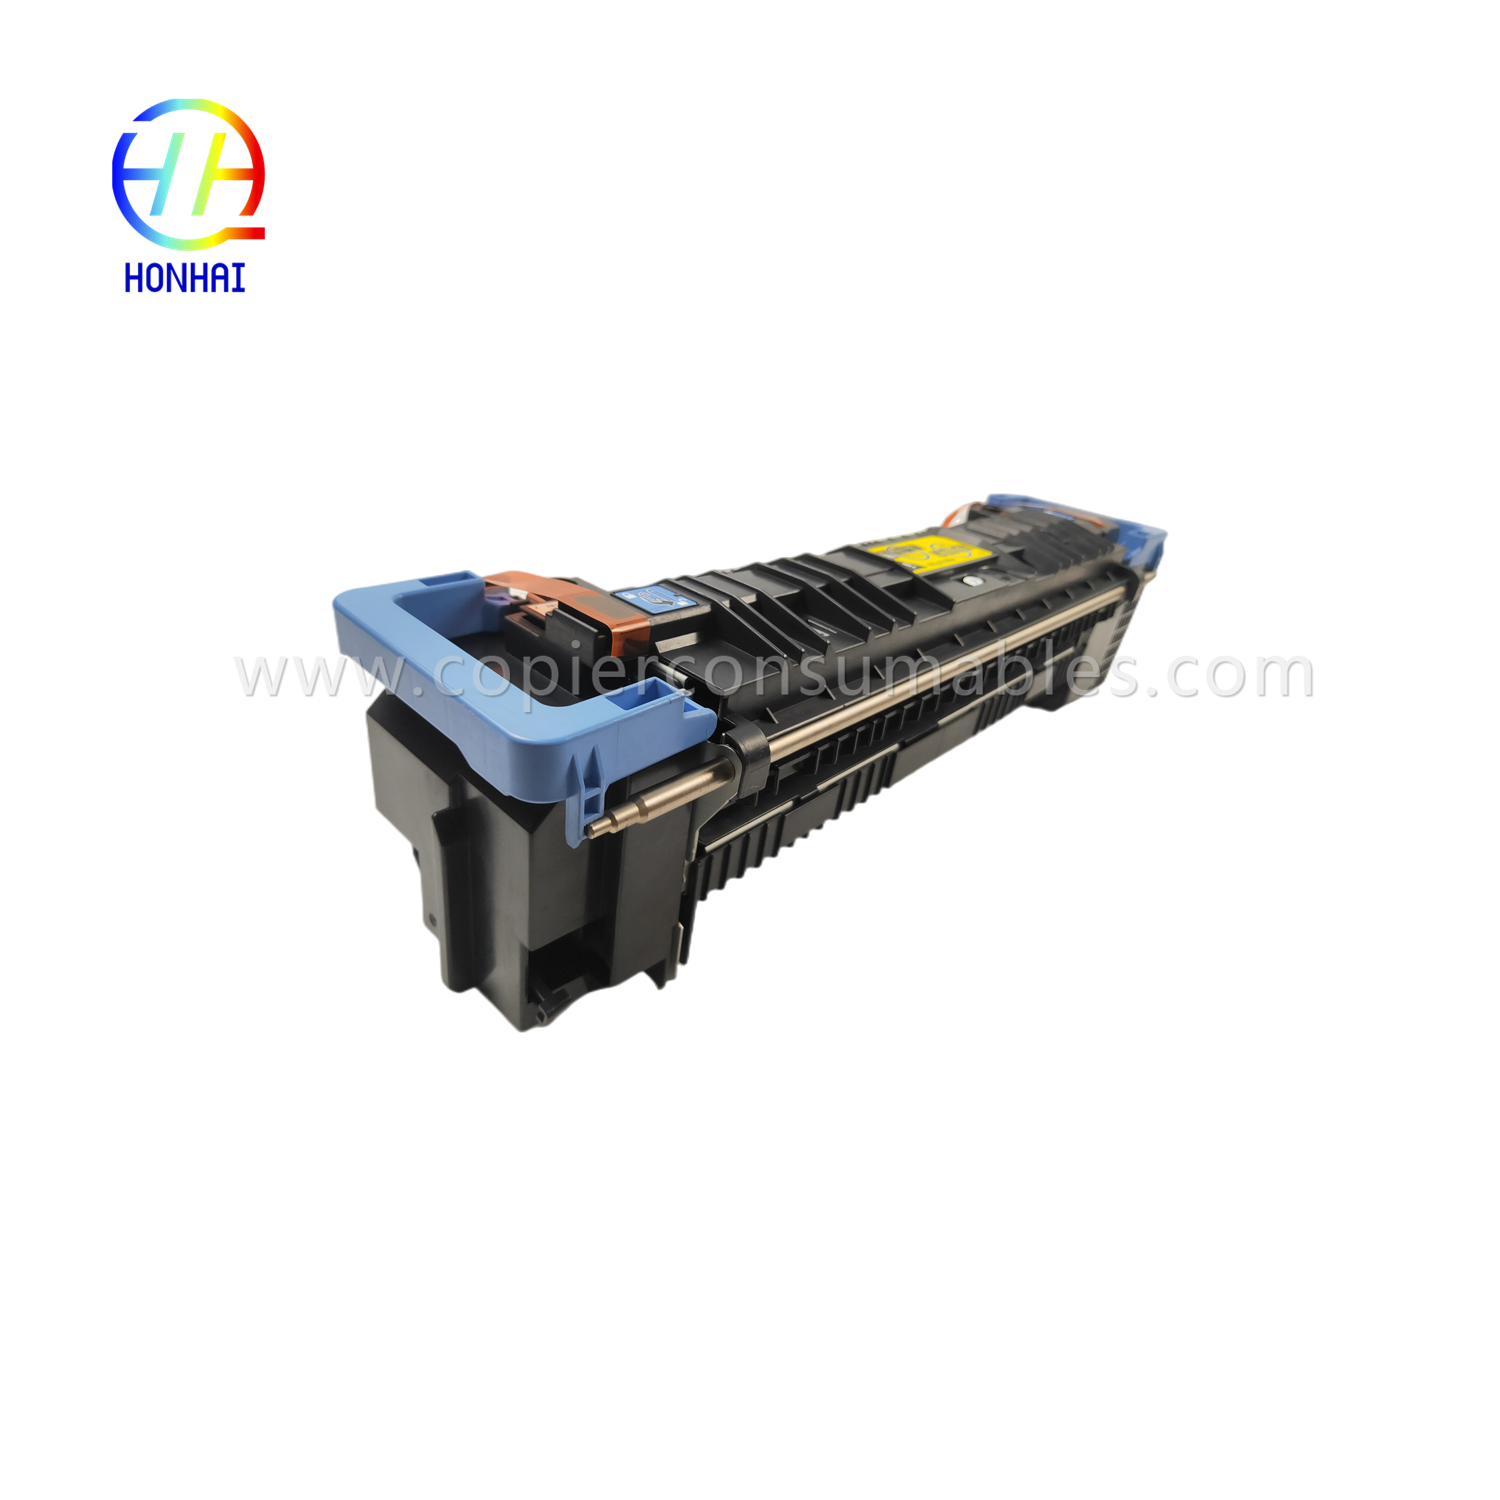 https://c585.goodao.net/fuser-assembly-unit-for-hp-m855-m880-m855dn-m855xh-m880z-m880z-c1n54-67901-c1n58-67901-fusing-heating-fixing/